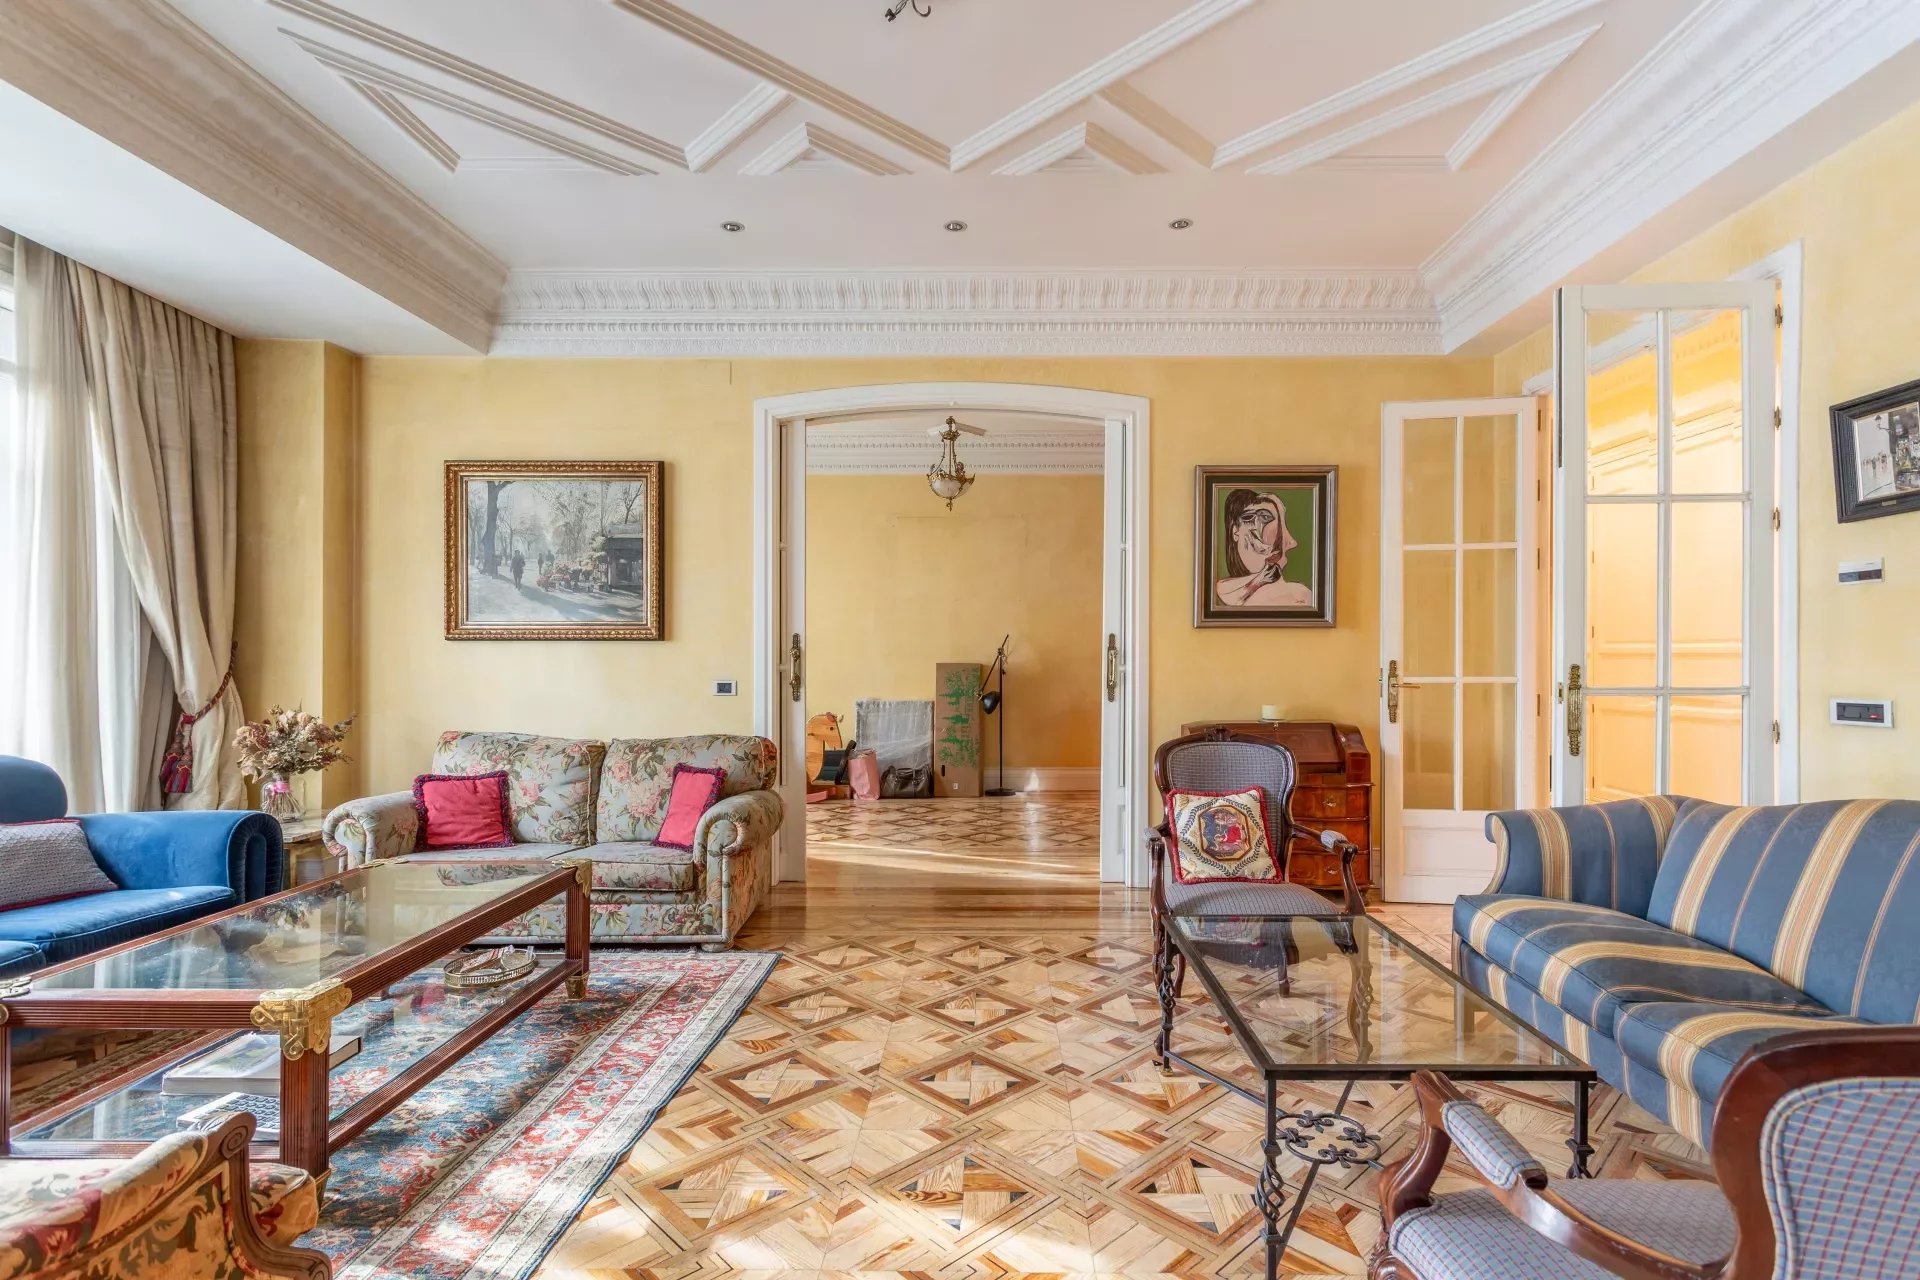 Exclusive apartment in the prestigious area of Almagro, Madrid - picture 6 title=